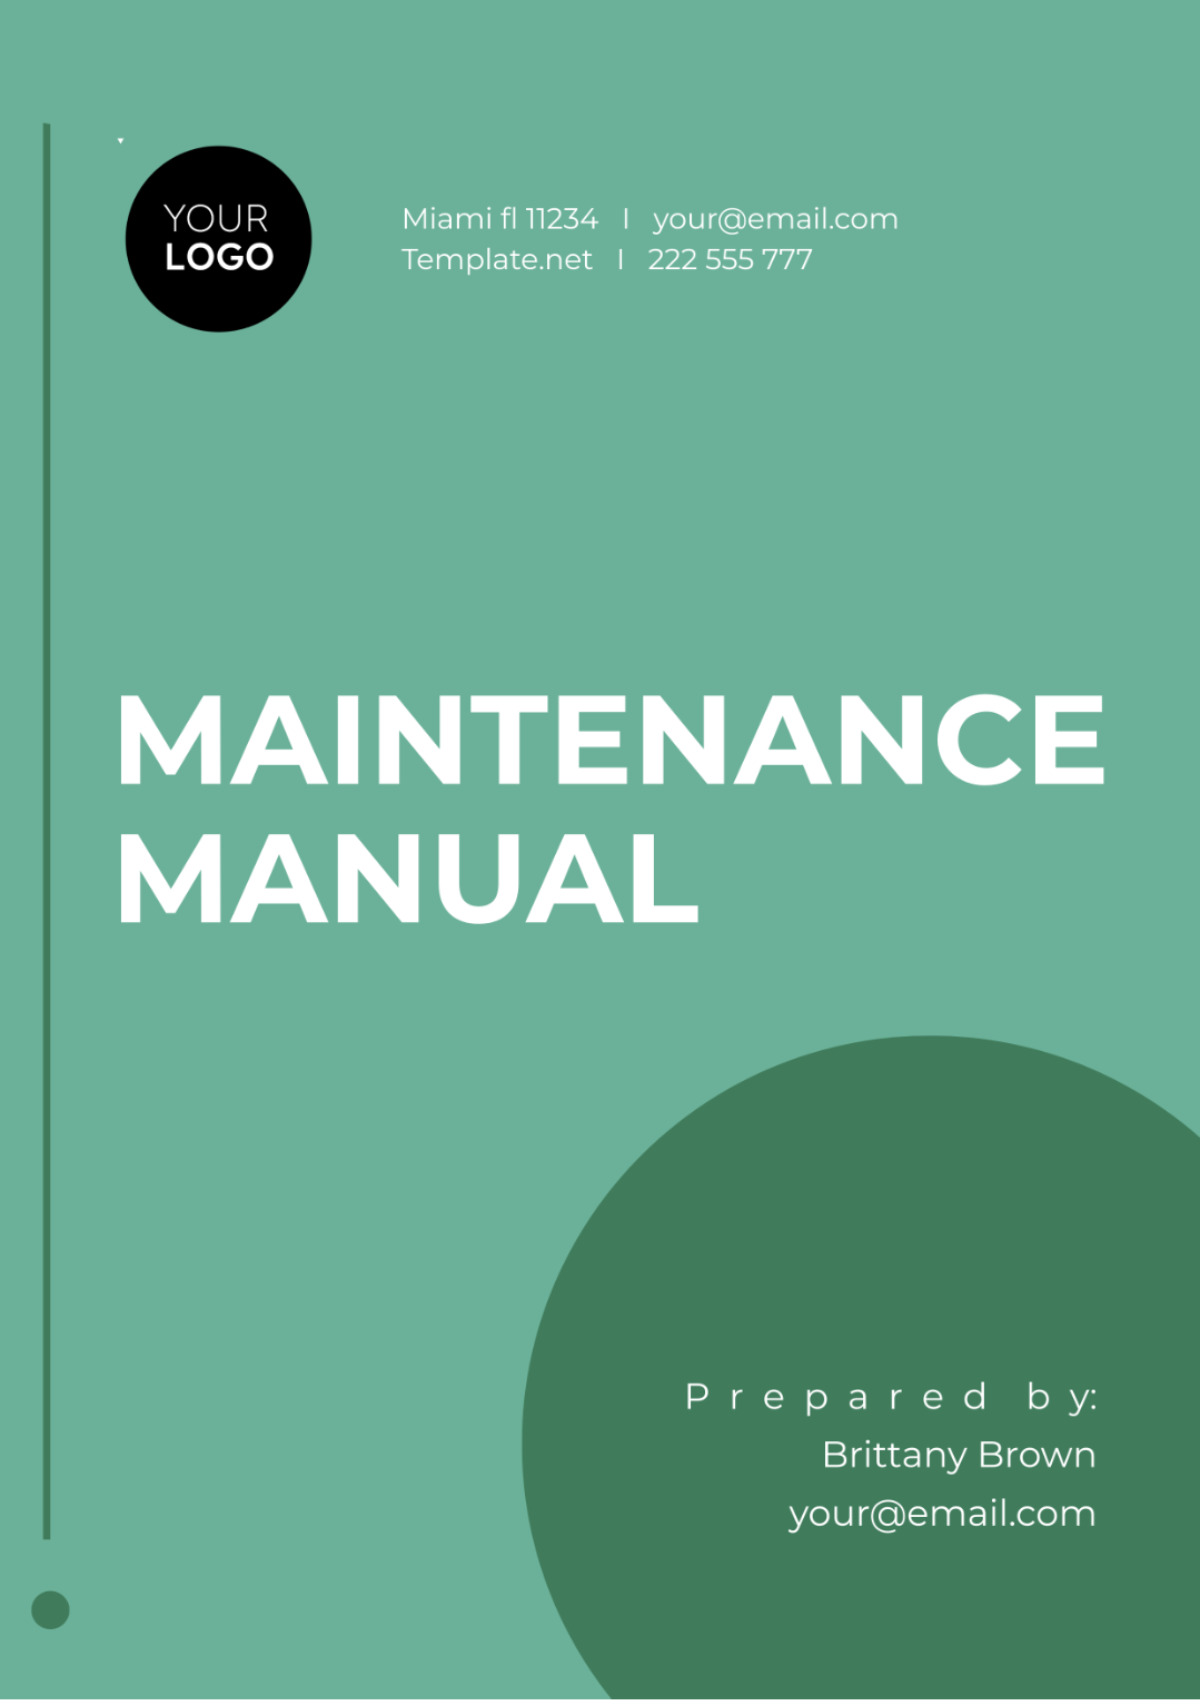 Maintenance Manual Template